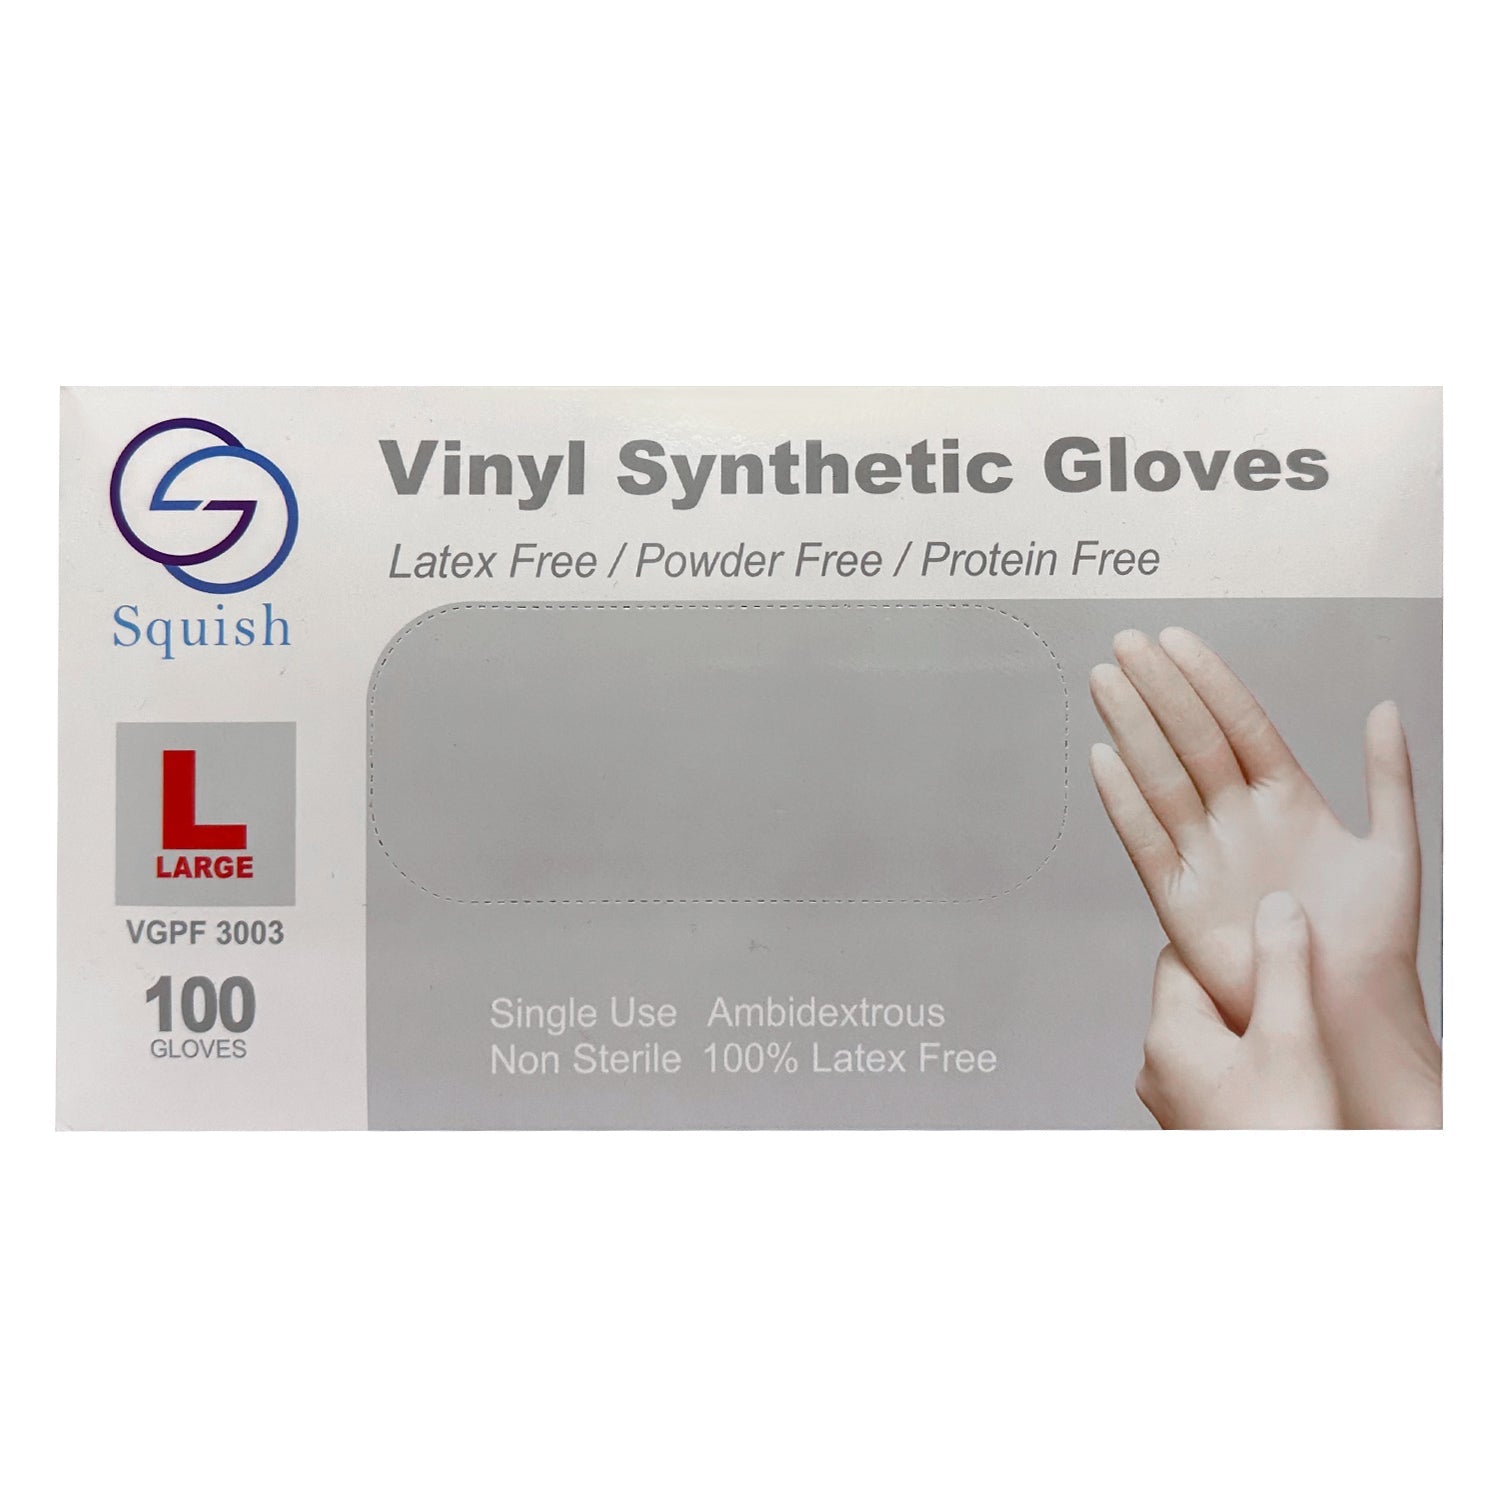 Squish Vinyl Synthetic Gloves 100ct